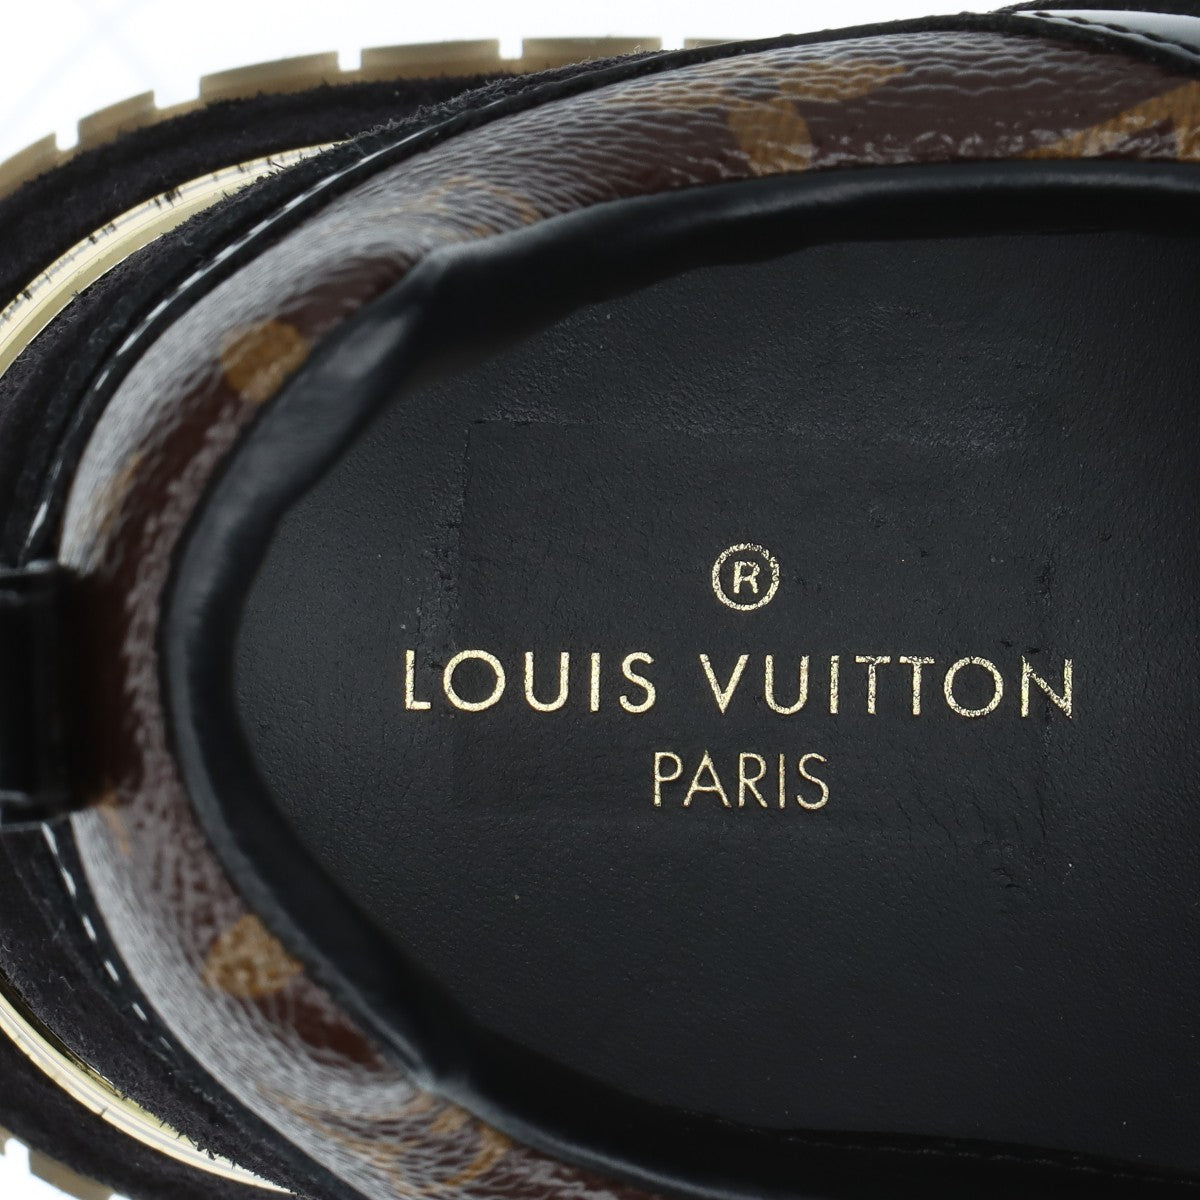 Louis Vuitton Runwayline 18 Years MeshLeather Trainers 37.5  Black×Brown CL0188 Monogram  Bag